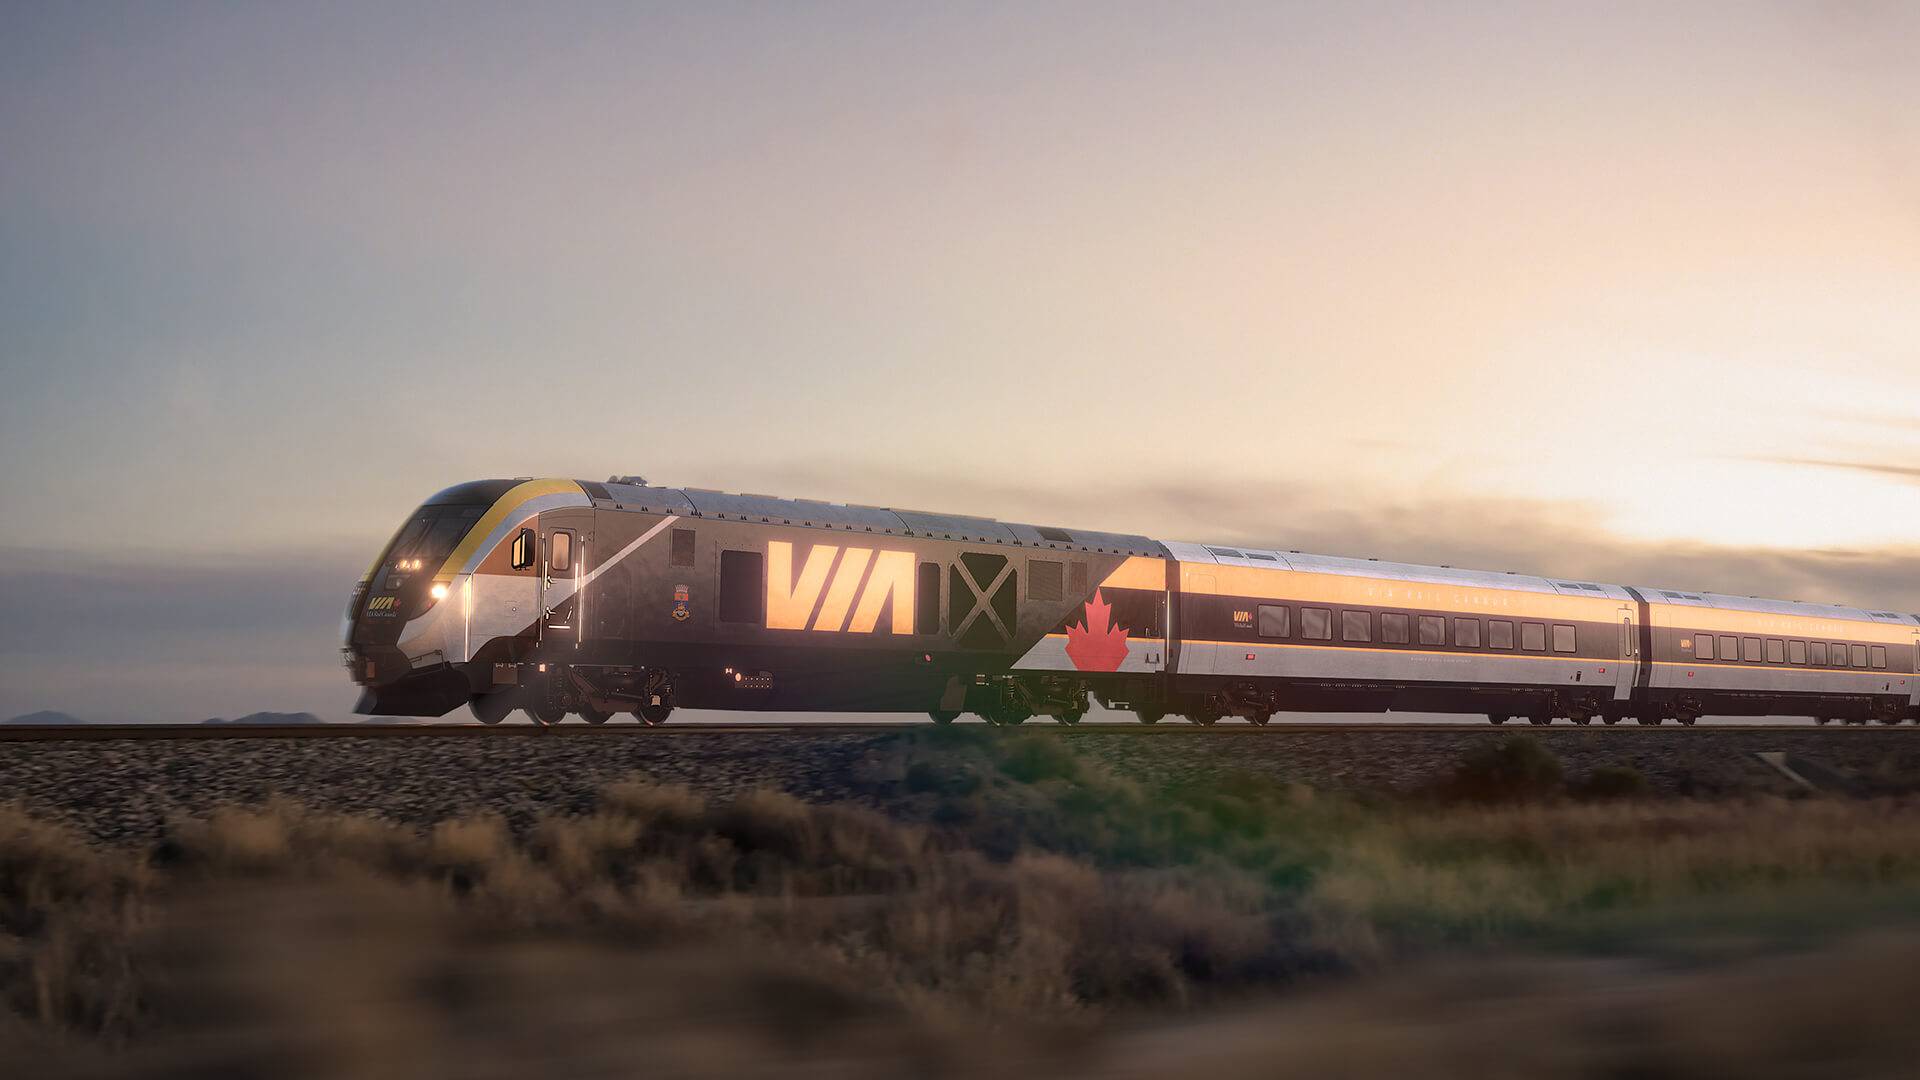 The new fleet VIA train shown in a vast empty landscape